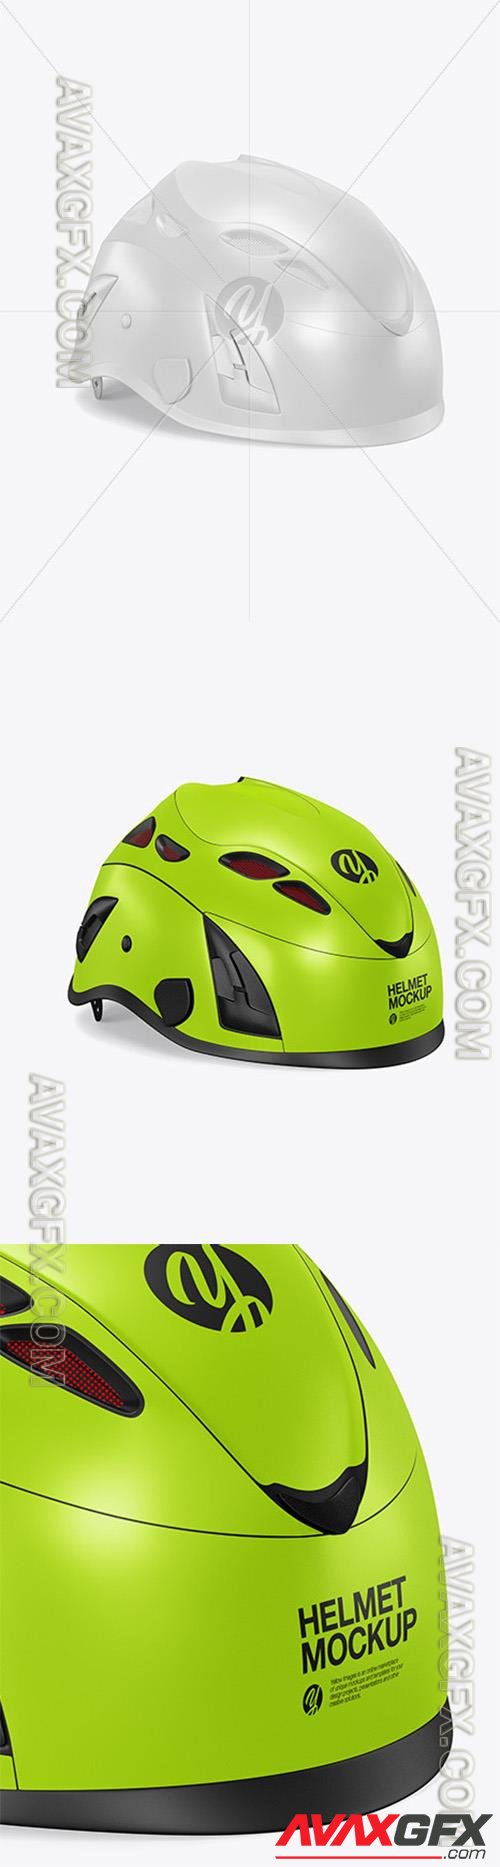 Cycling Helmet Mockup 75309